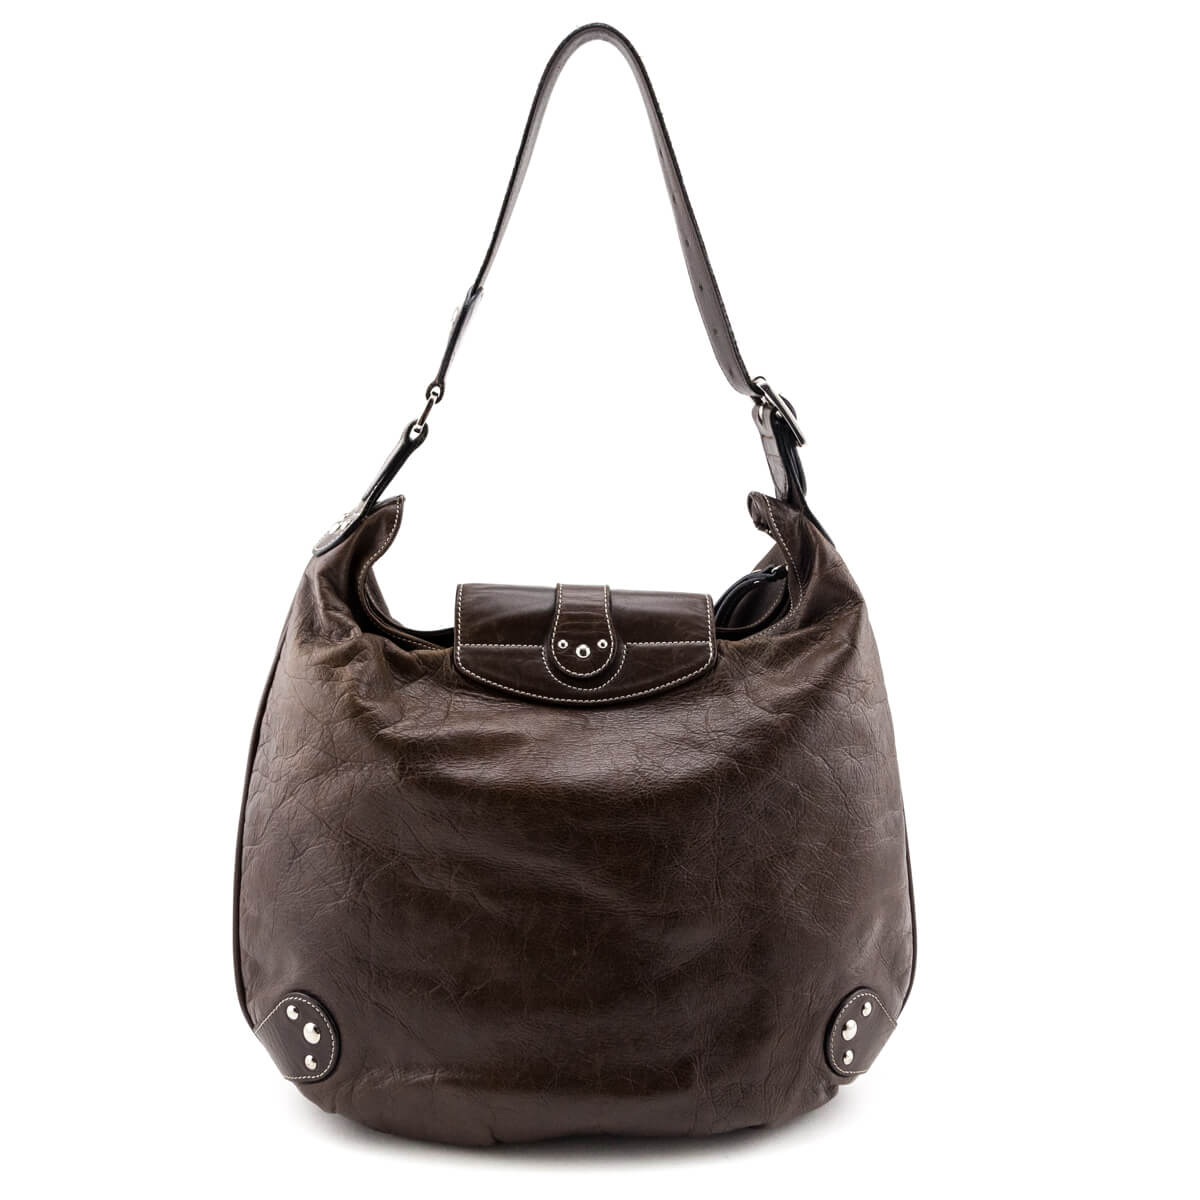 Vintage LONGCHAMP Chocolate Brown Nylon & Leather Hobo Shoulder Bag